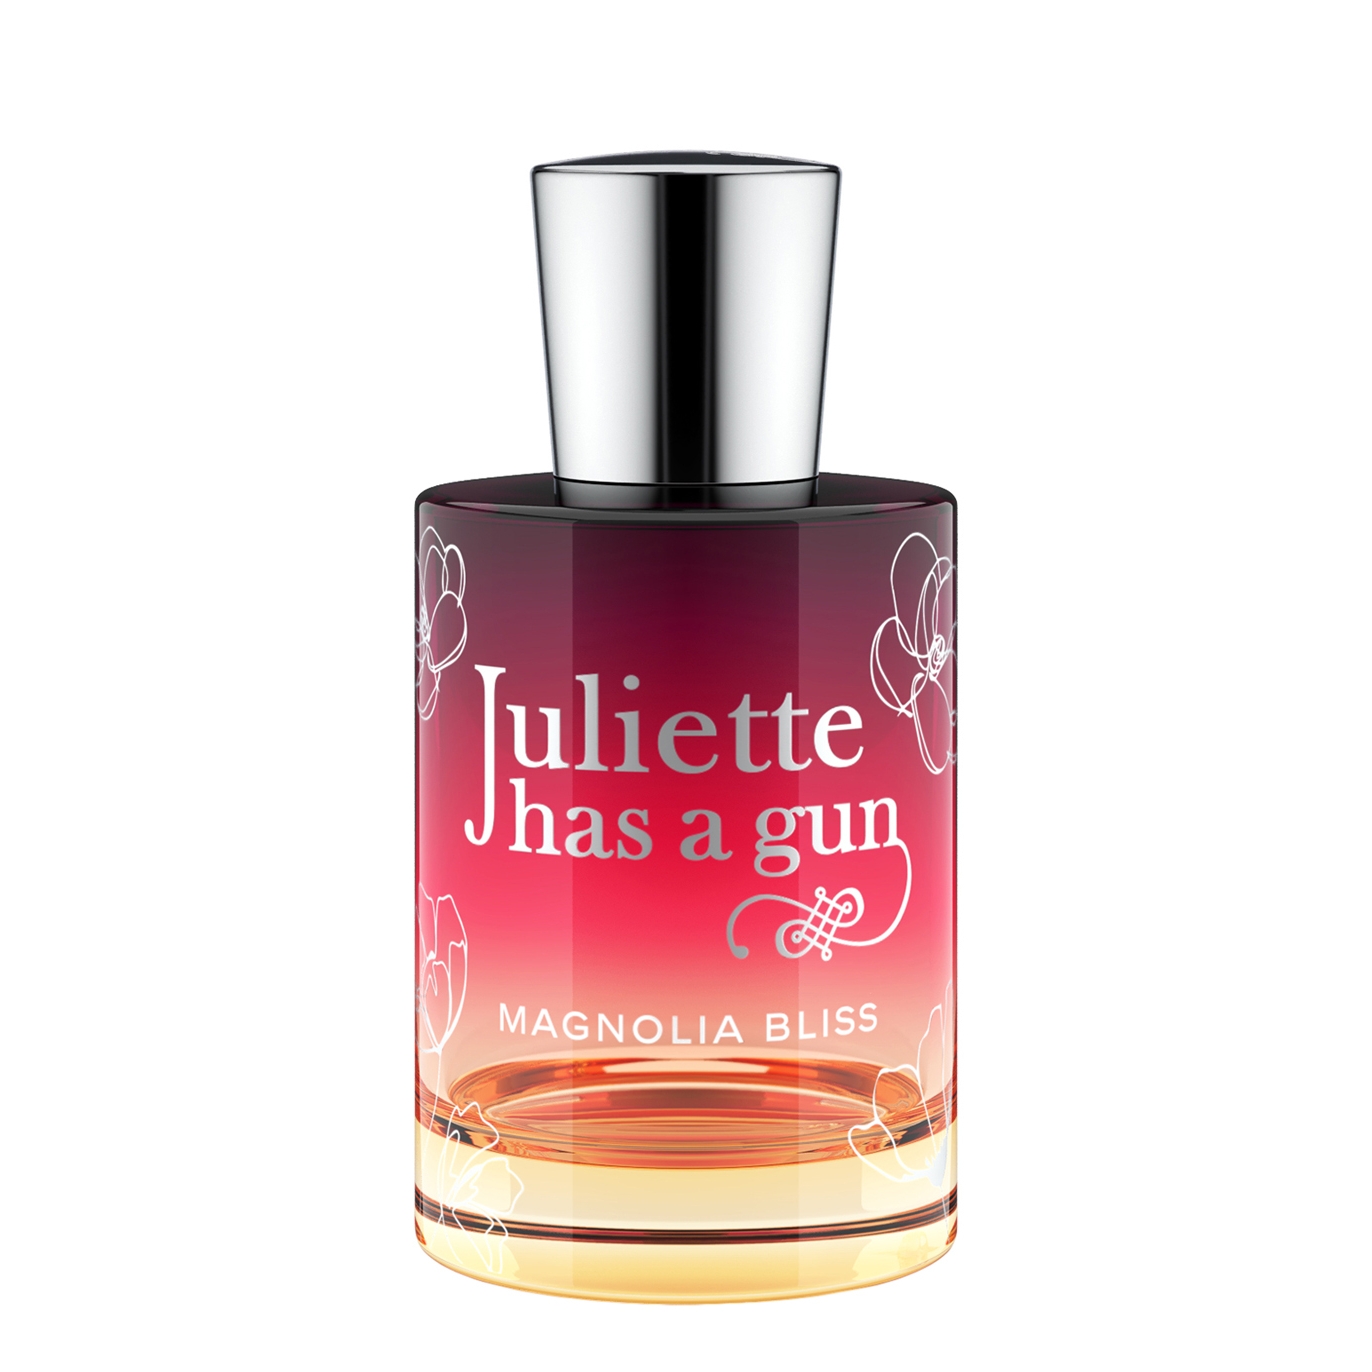 Juliette Has a Gun Magnolia Bliss Eau De Parfum 50ml, Bergamot Essence